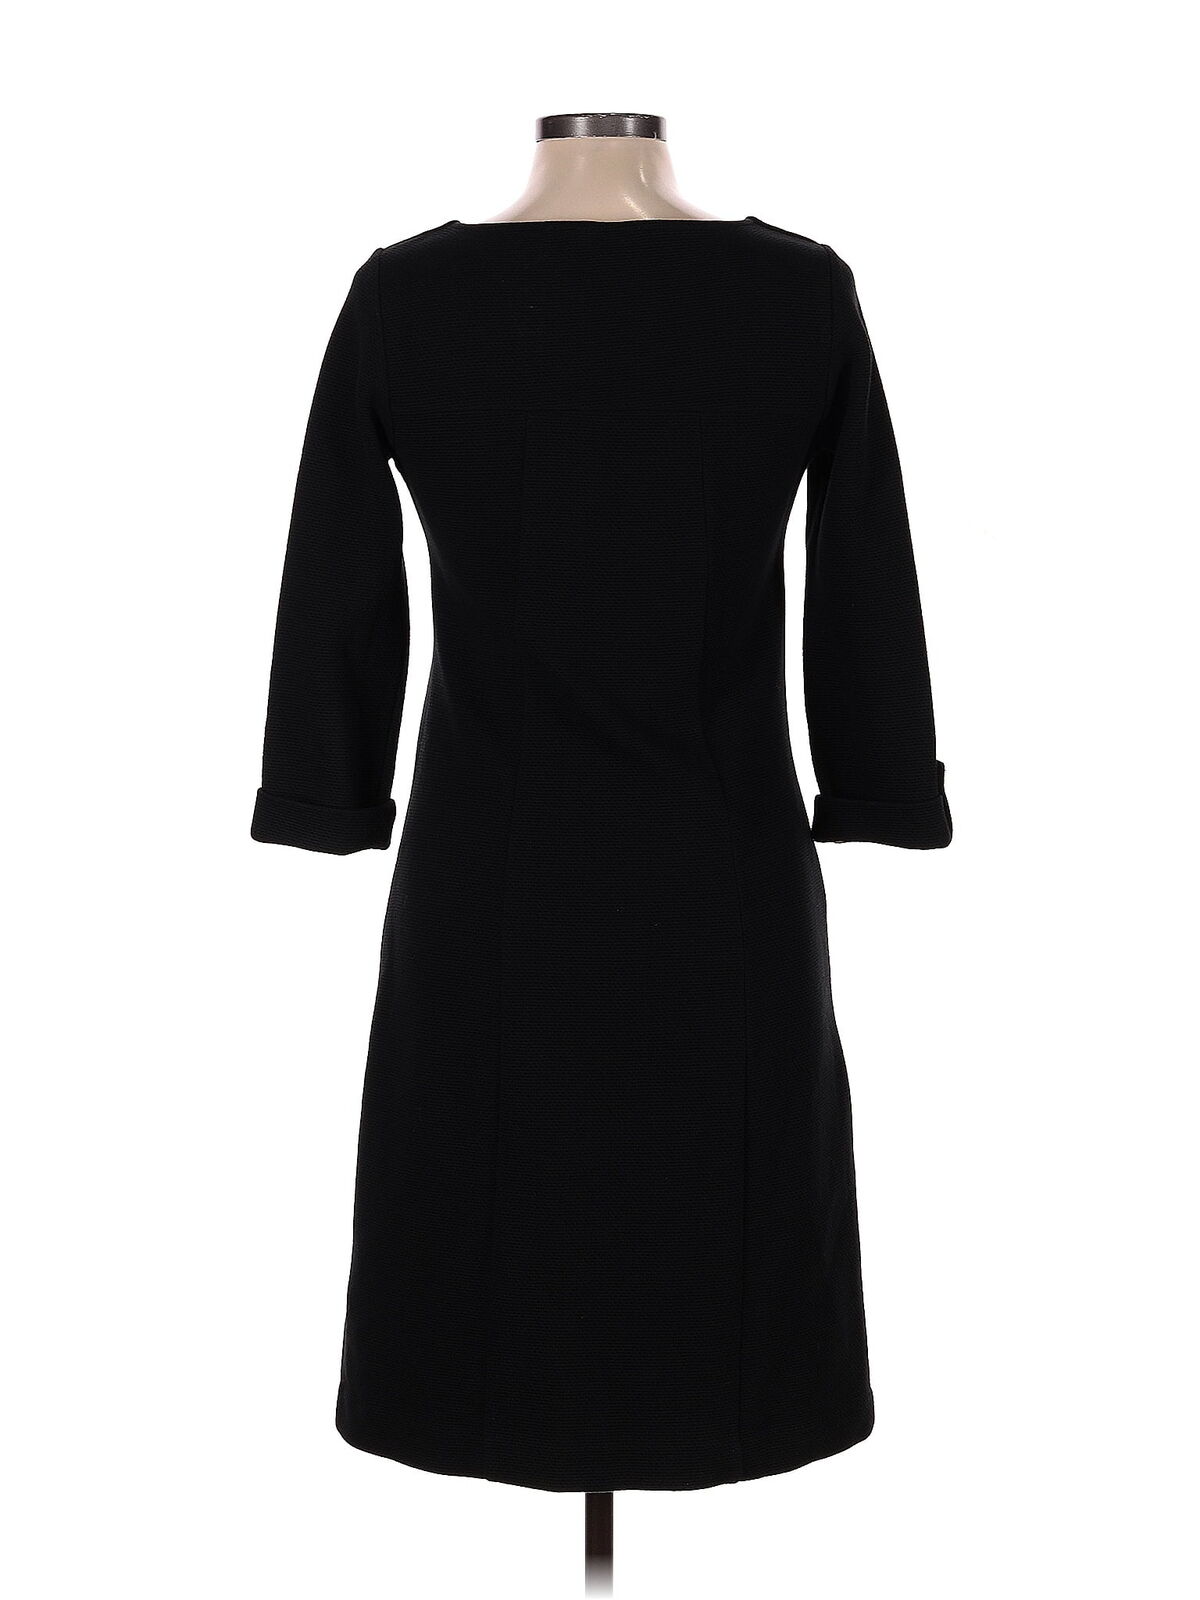 Boden Women Black Casual Dress 6 - image 2